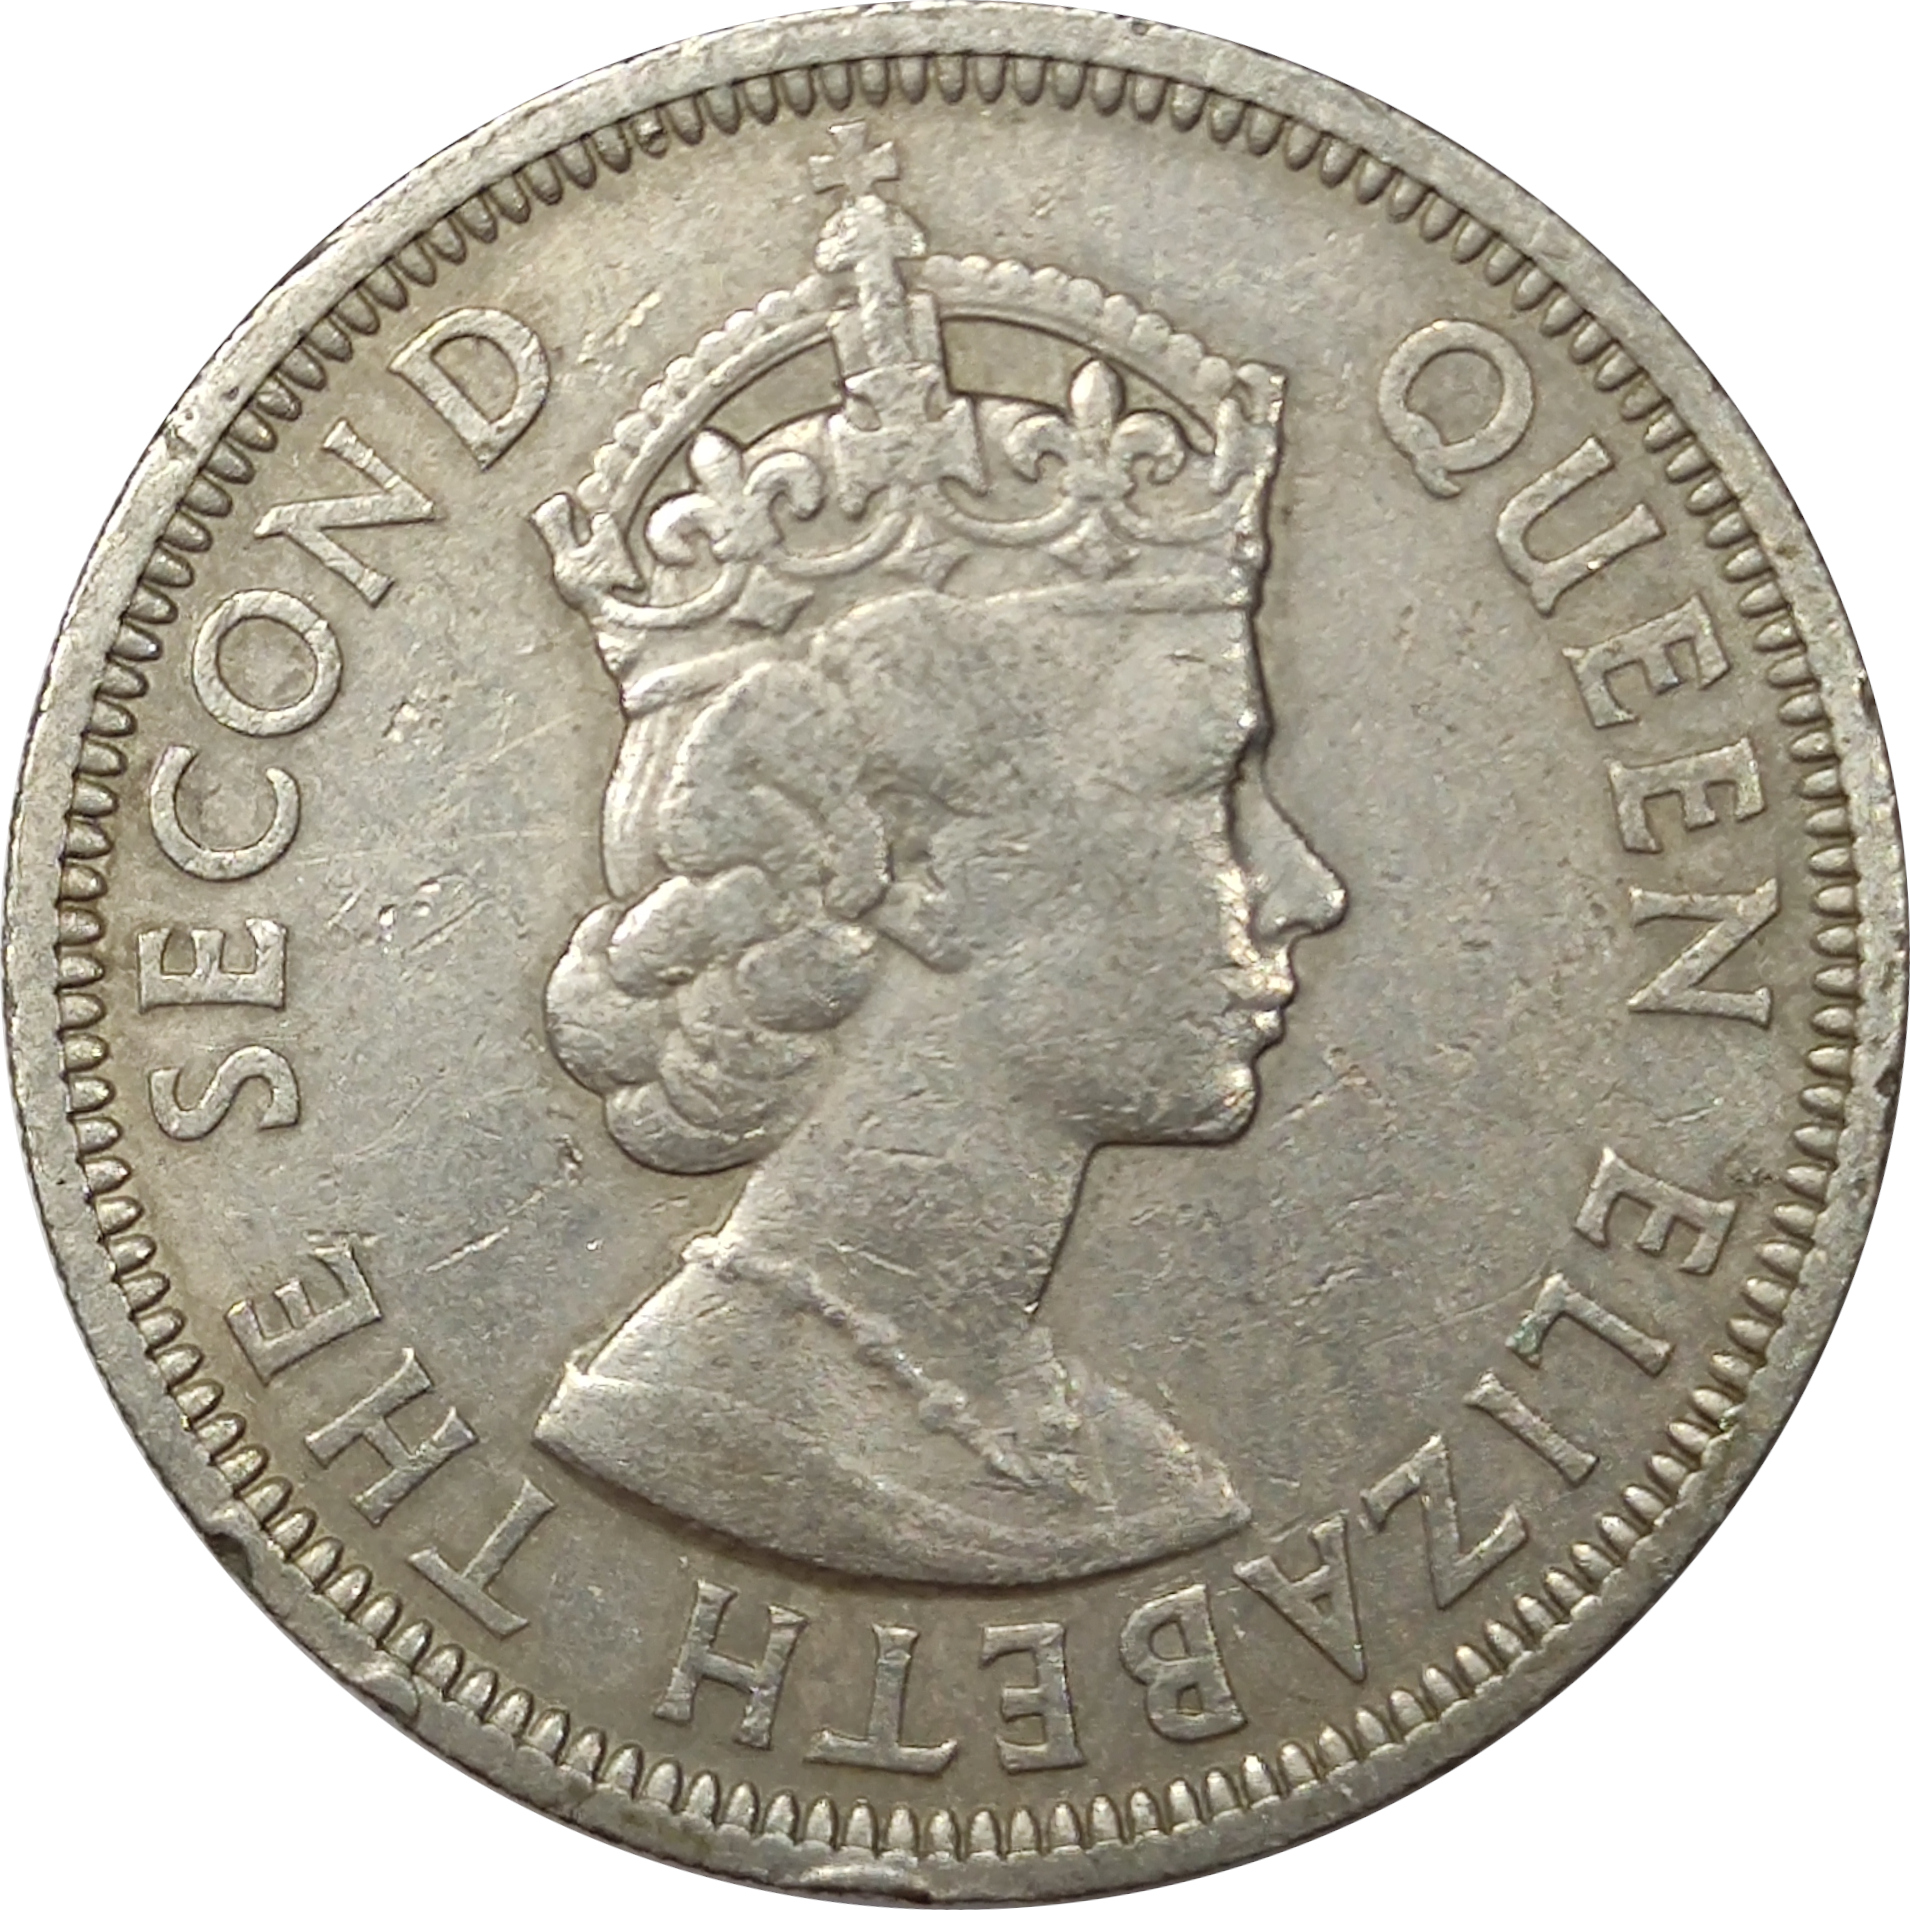 1 rupee - Elizabeth II